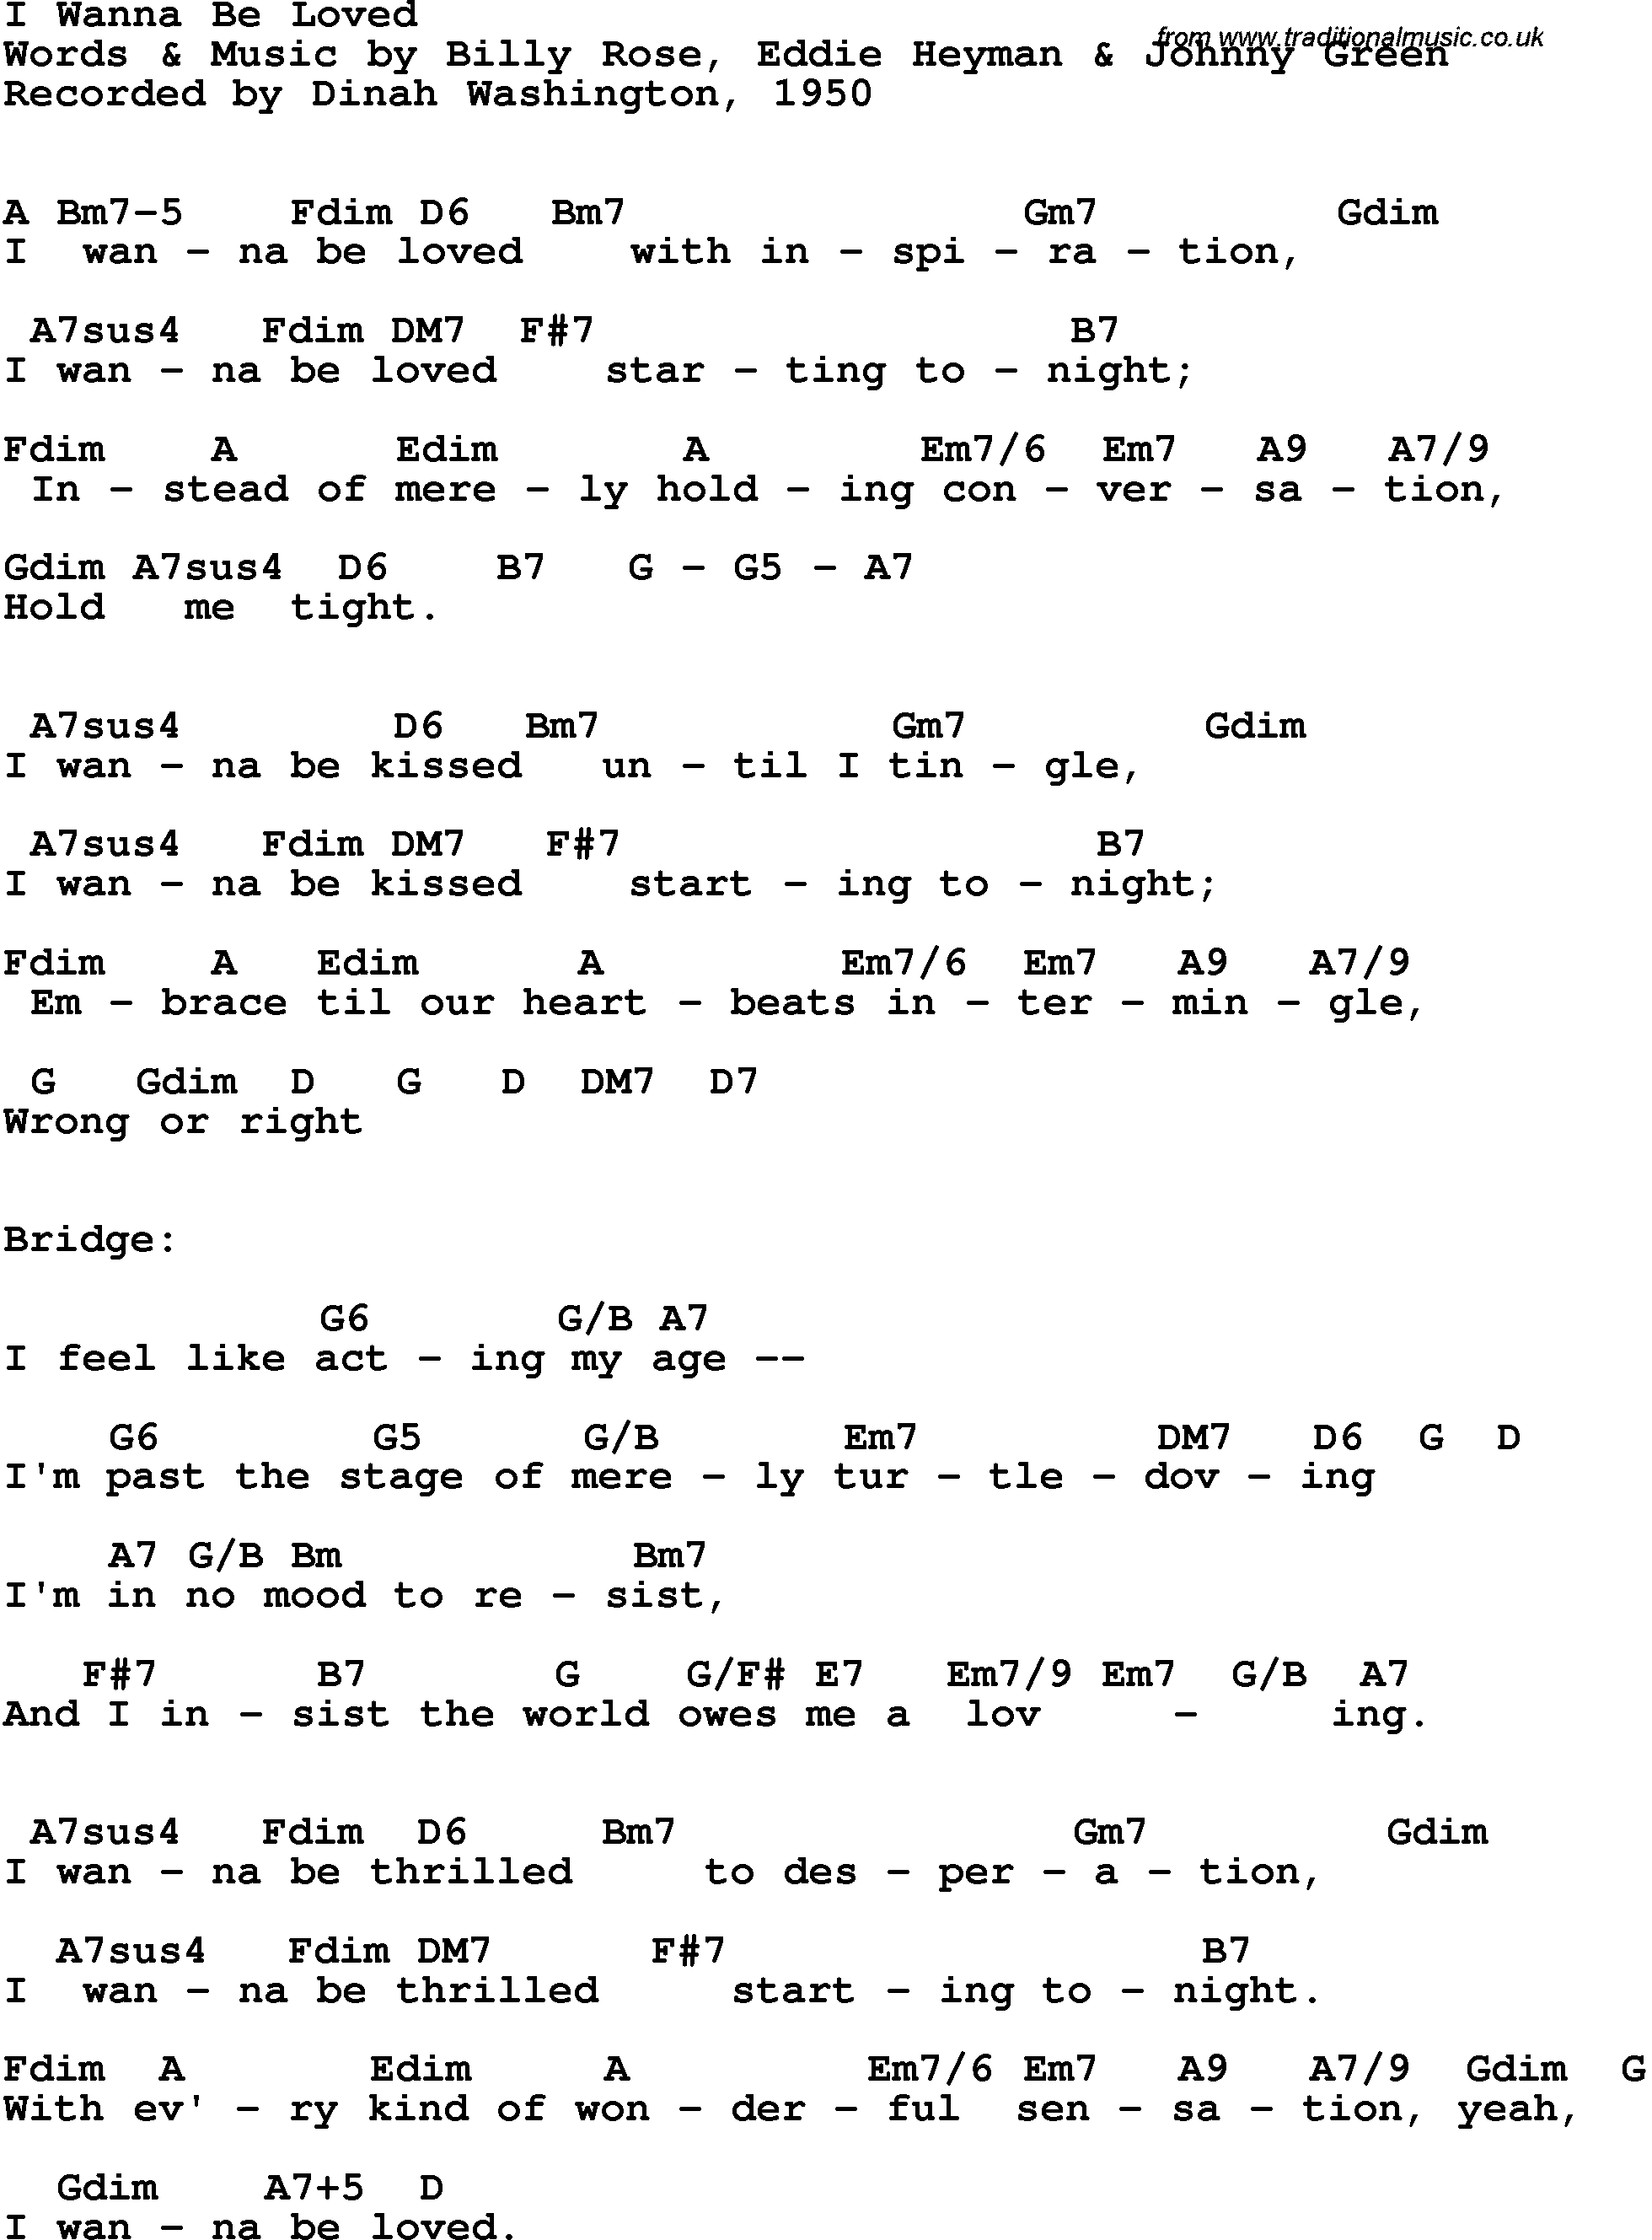 Song Lyrics with guitar chords for I Wanna Be Loved - Dinah Washington, 1950